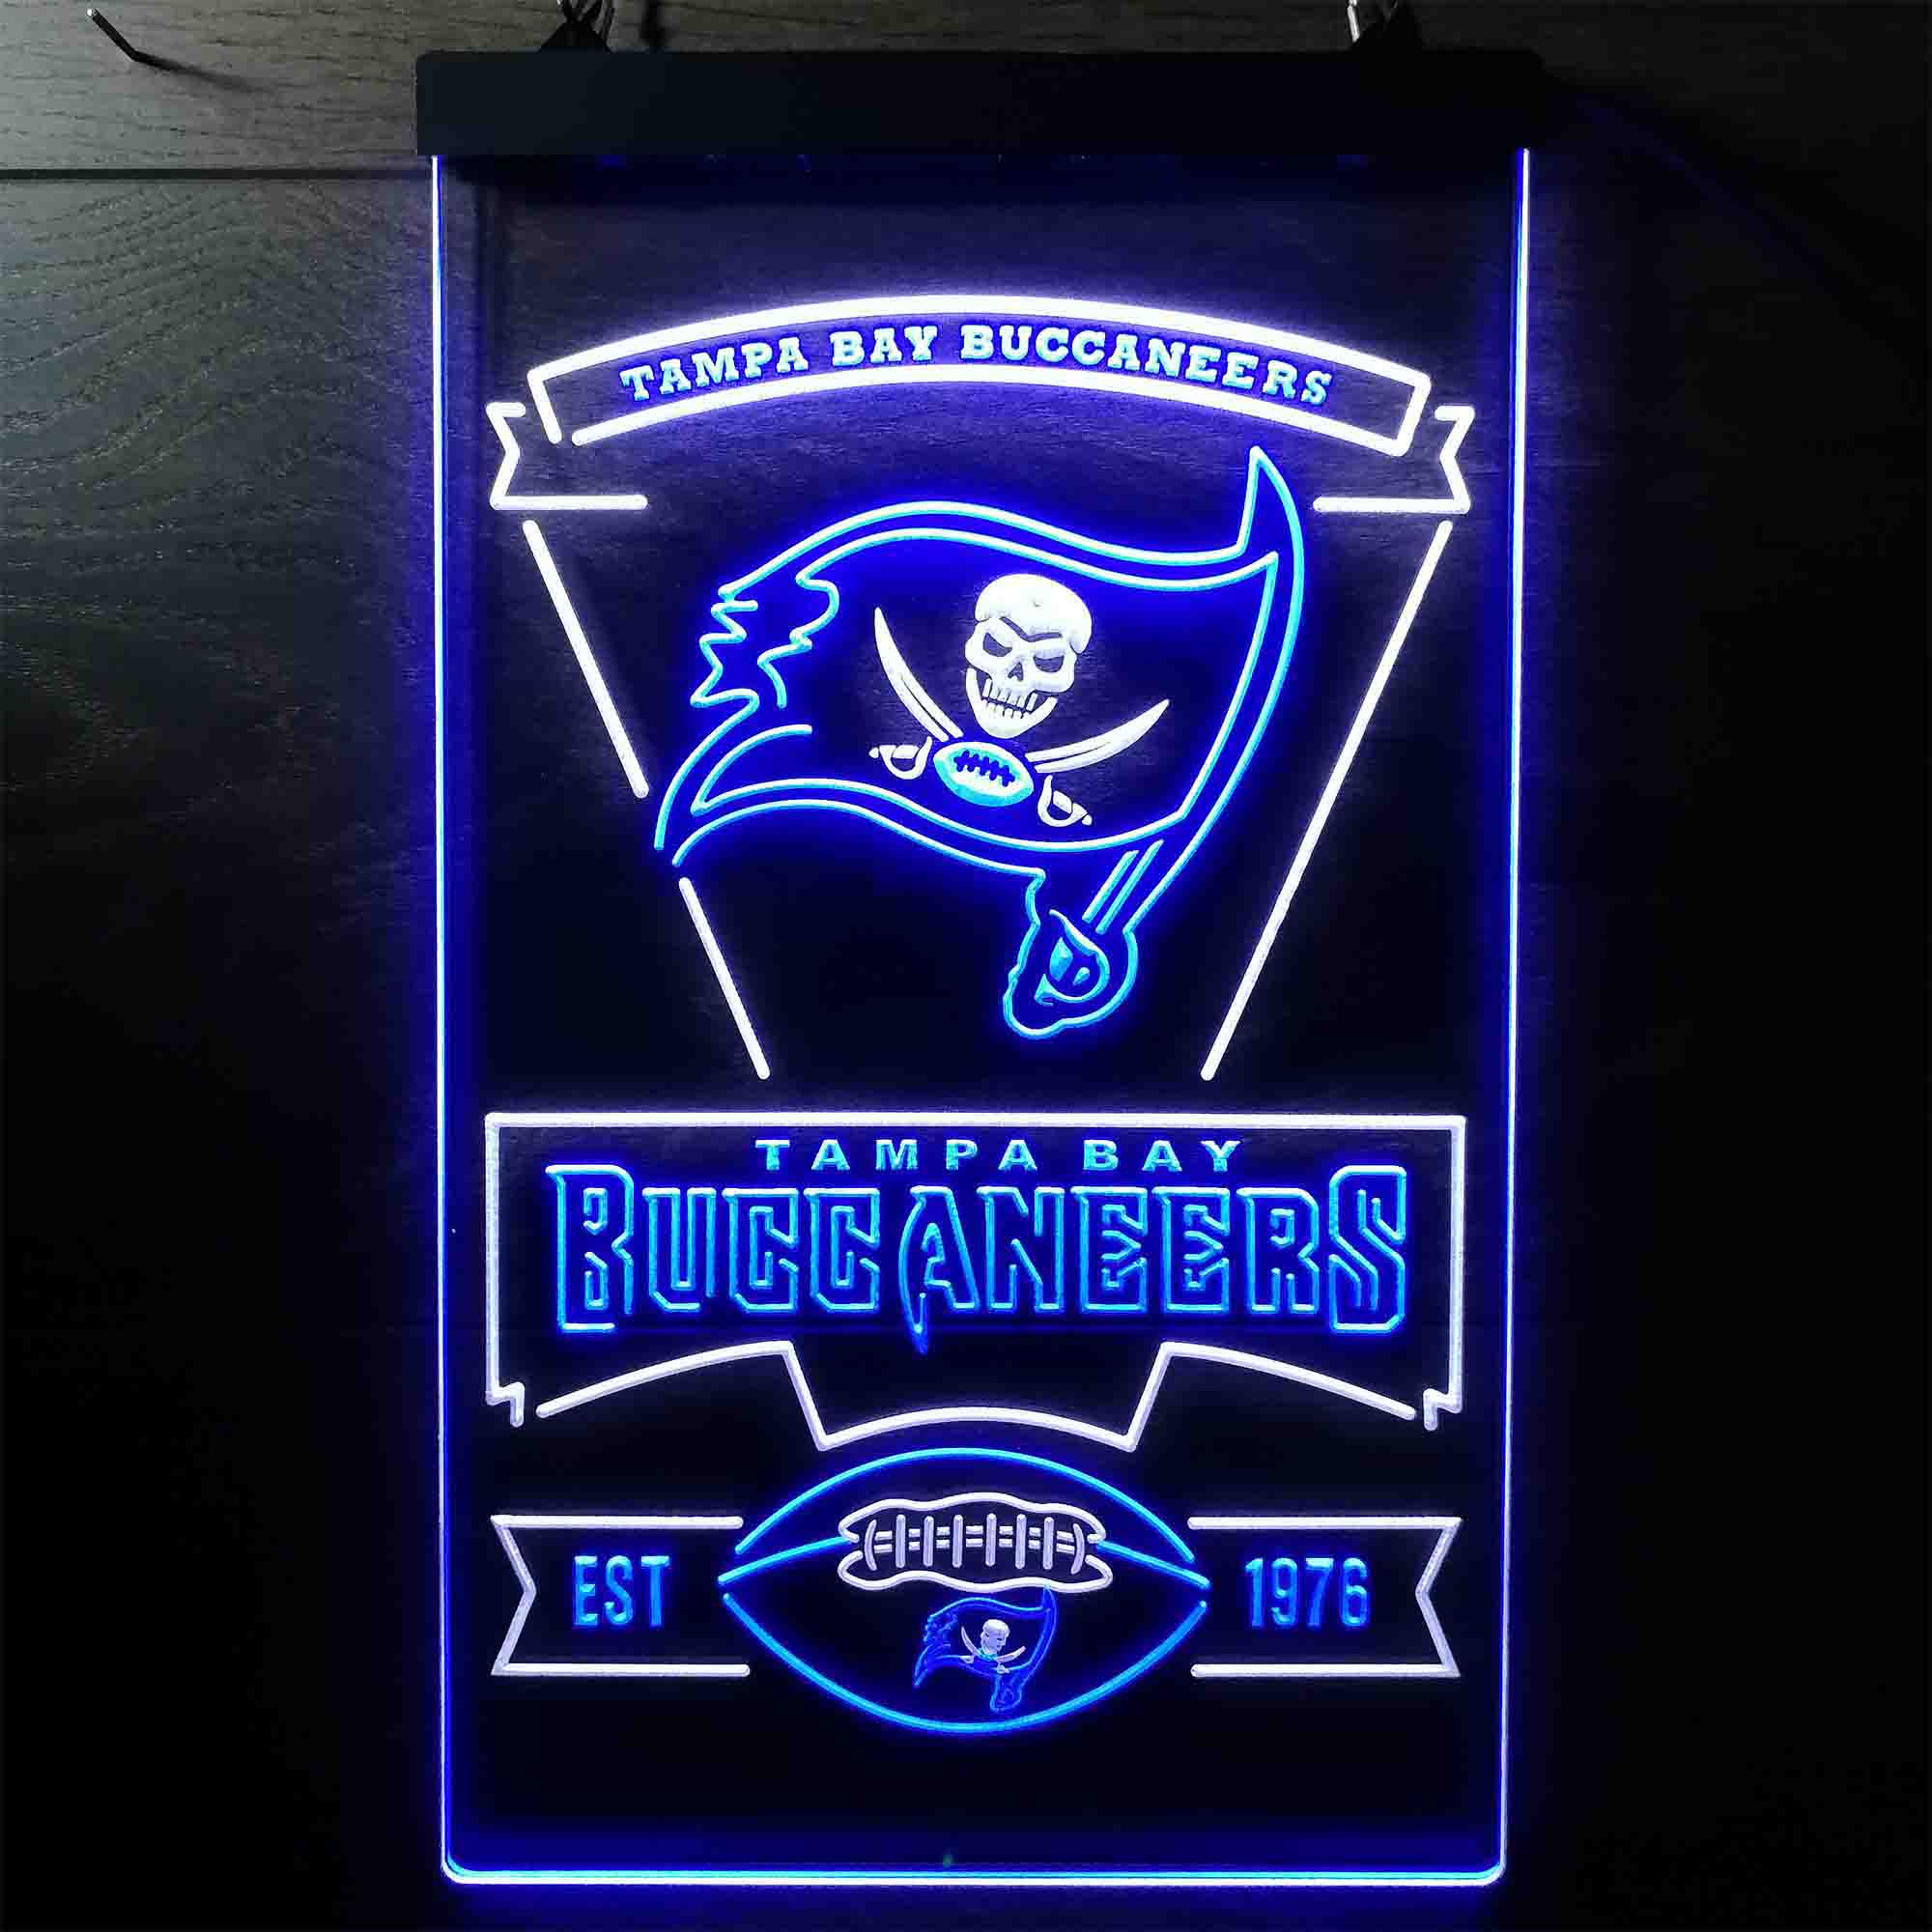 Tampas Bays League Club Buccaneerss LED Neon Sign